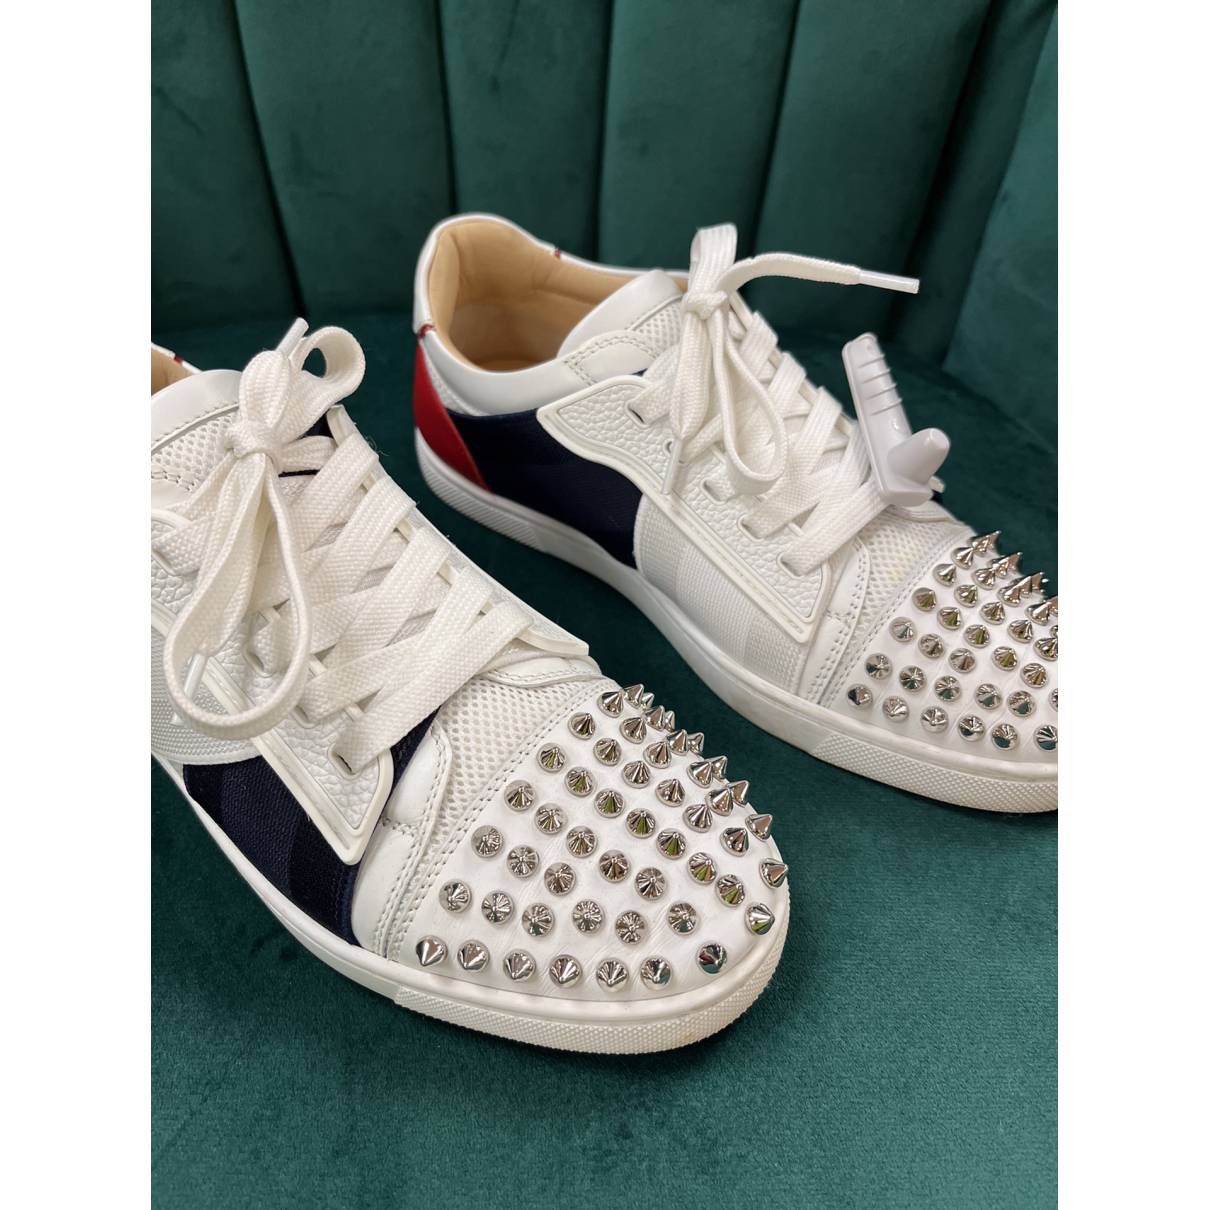 Christian Louboutin Sneakers aus Leder - Weiß - Größe 36 - 30171375